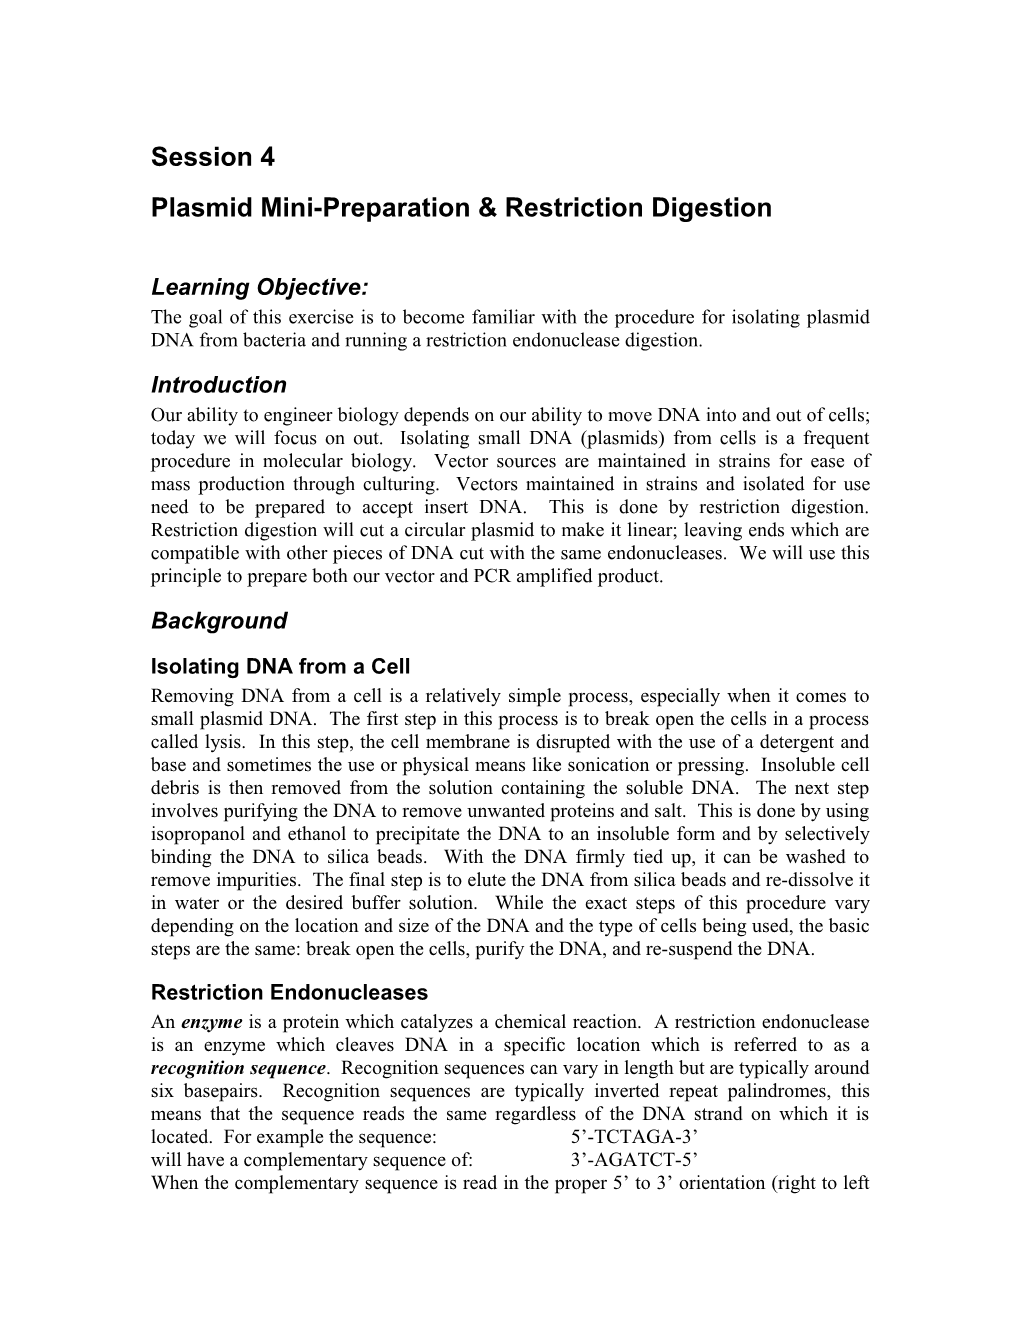 Plasmid Mini-Preparation & Restriction Digestion